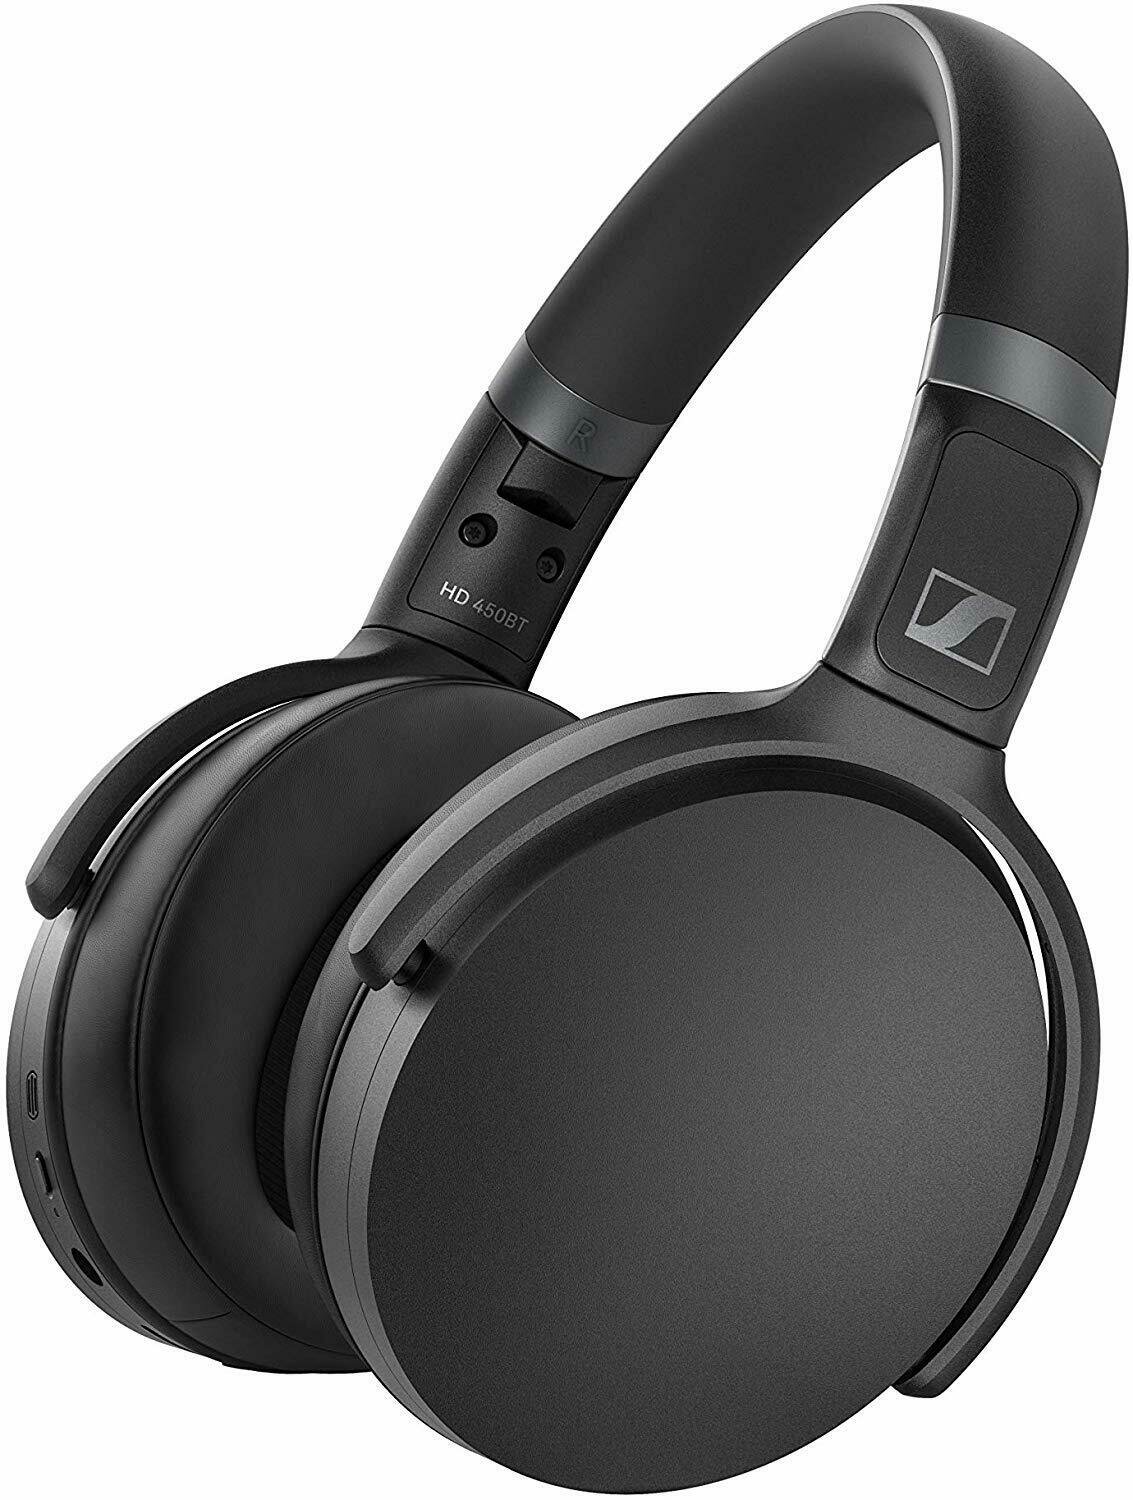 Sennheiser HD 450BT Noise-Canceling Wireless Over-Ear Headphones (Black)
#SEHD450BTB MFR #508386